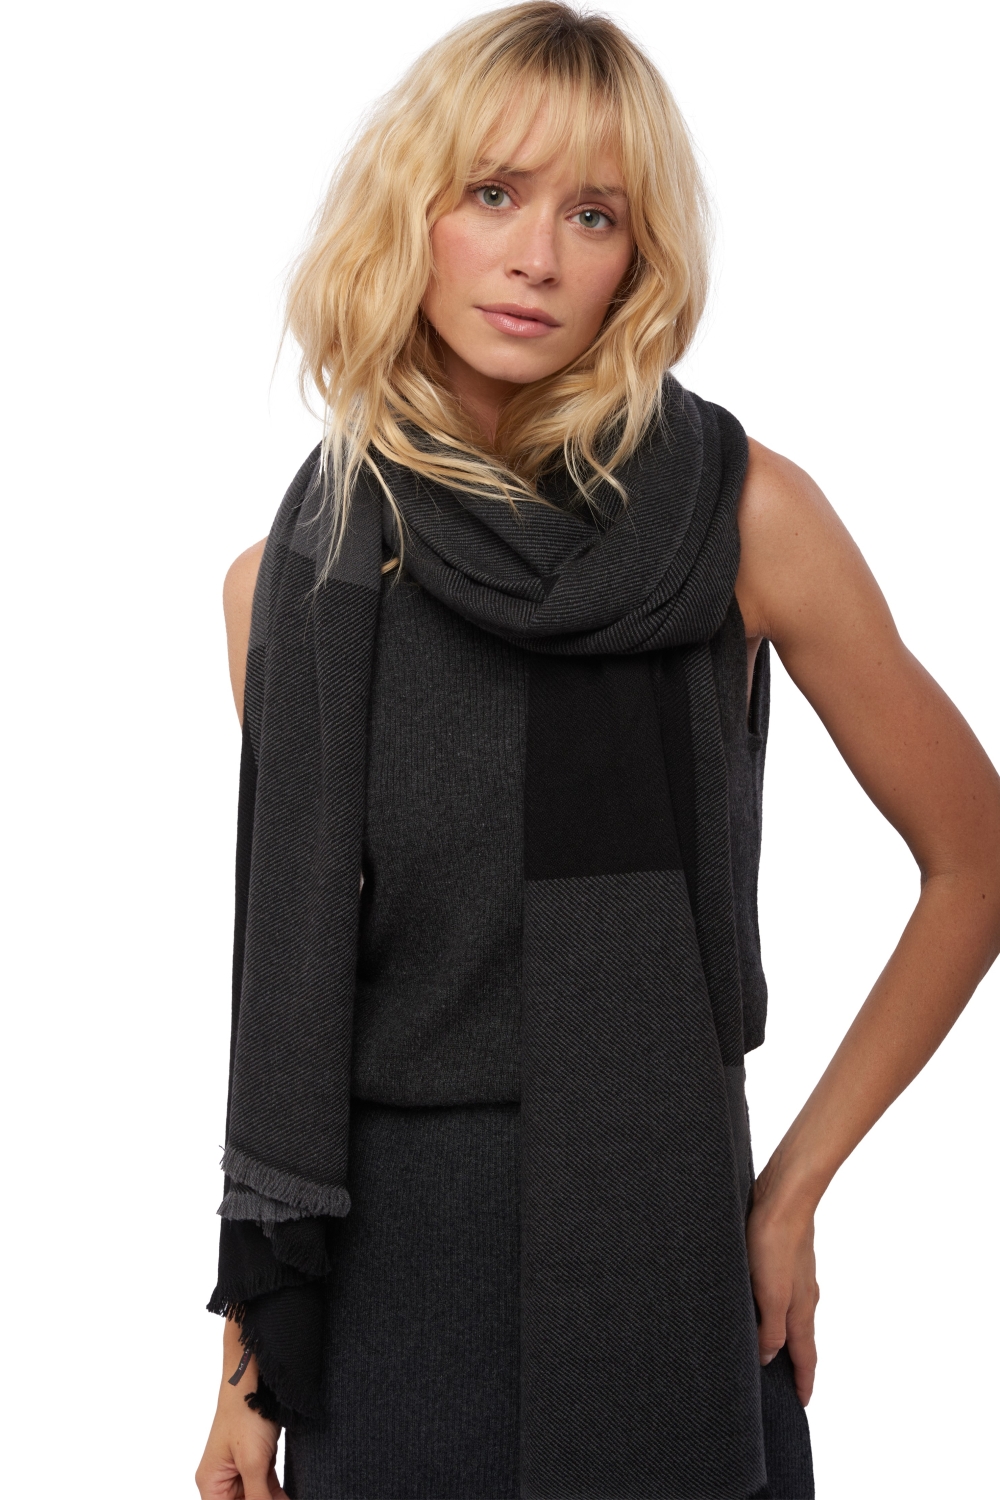 Cashmere accessories scarves mufflers verona black matt charcoal 225 x 75 cm